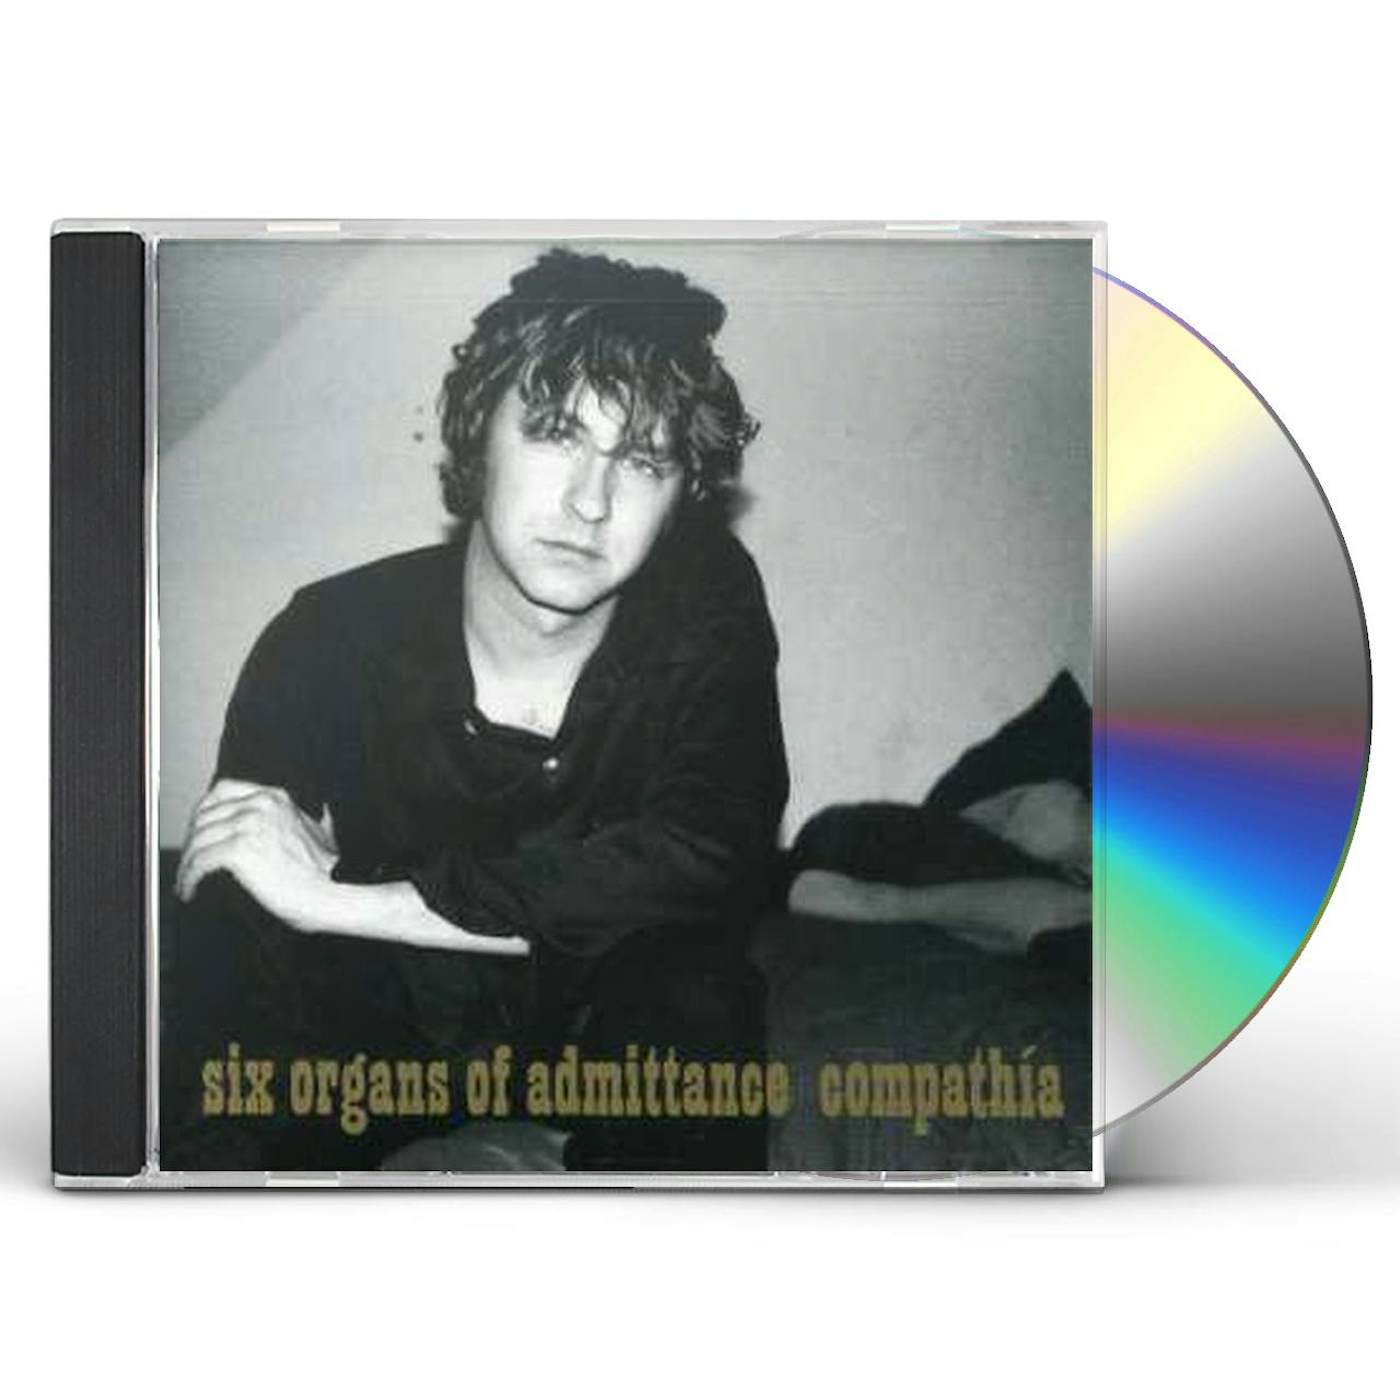 Six Organs Of Admittance COMPATHIA CD